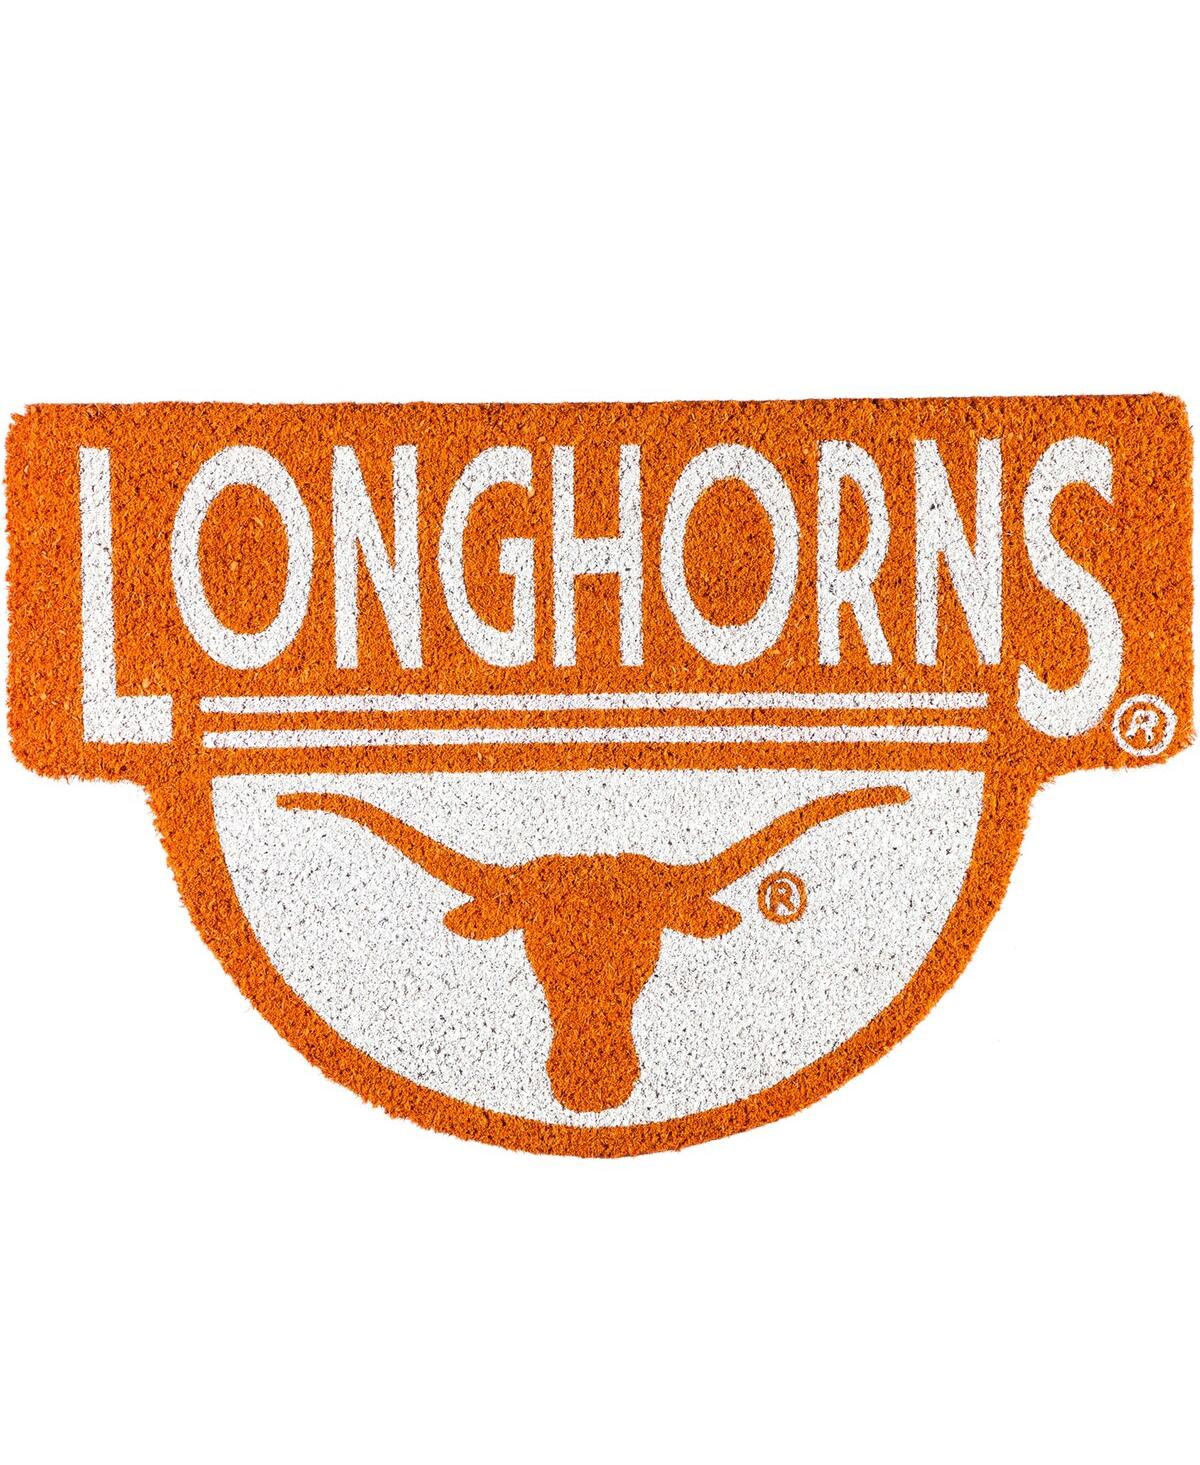 Evergreen Enterprises Texas Longhorns Shaped Coir Doormat In Orange